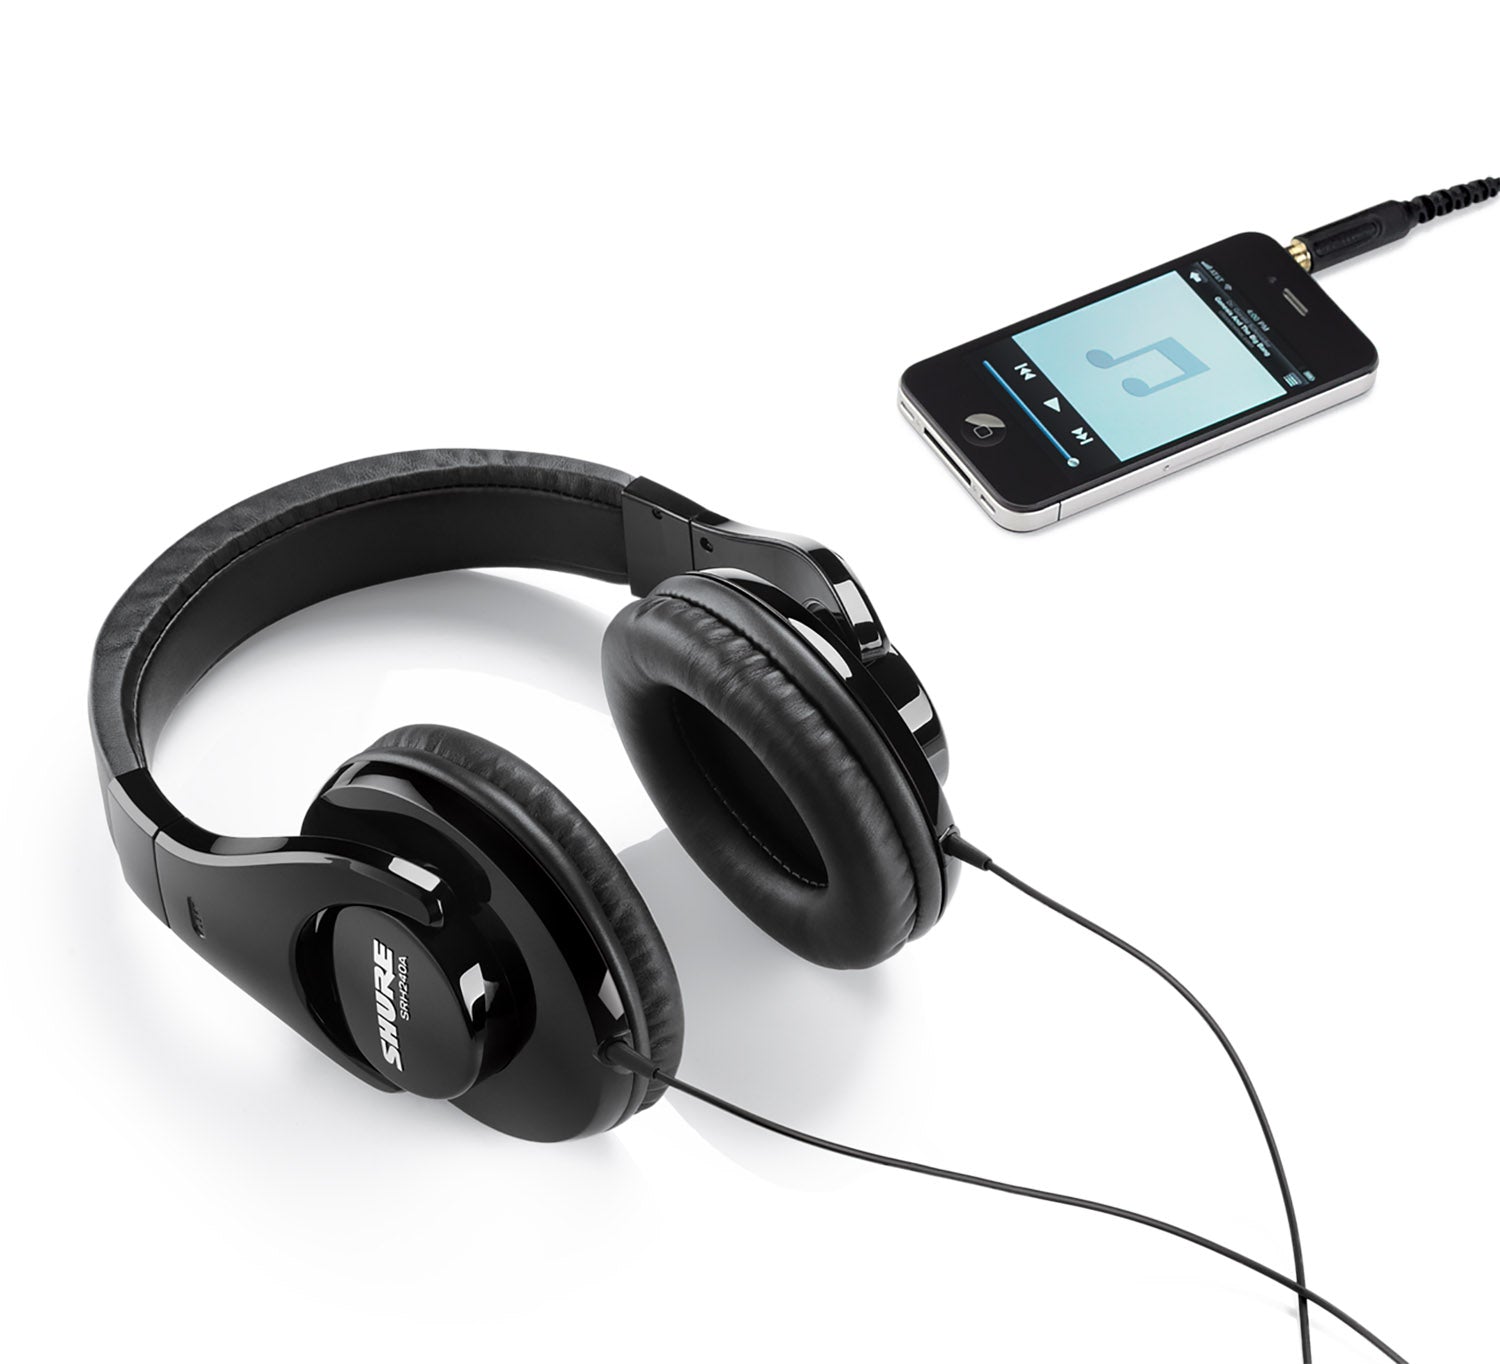 Shure SRH240A Professional Quality Headphones (Black) - Open Box - Hollywood DJ